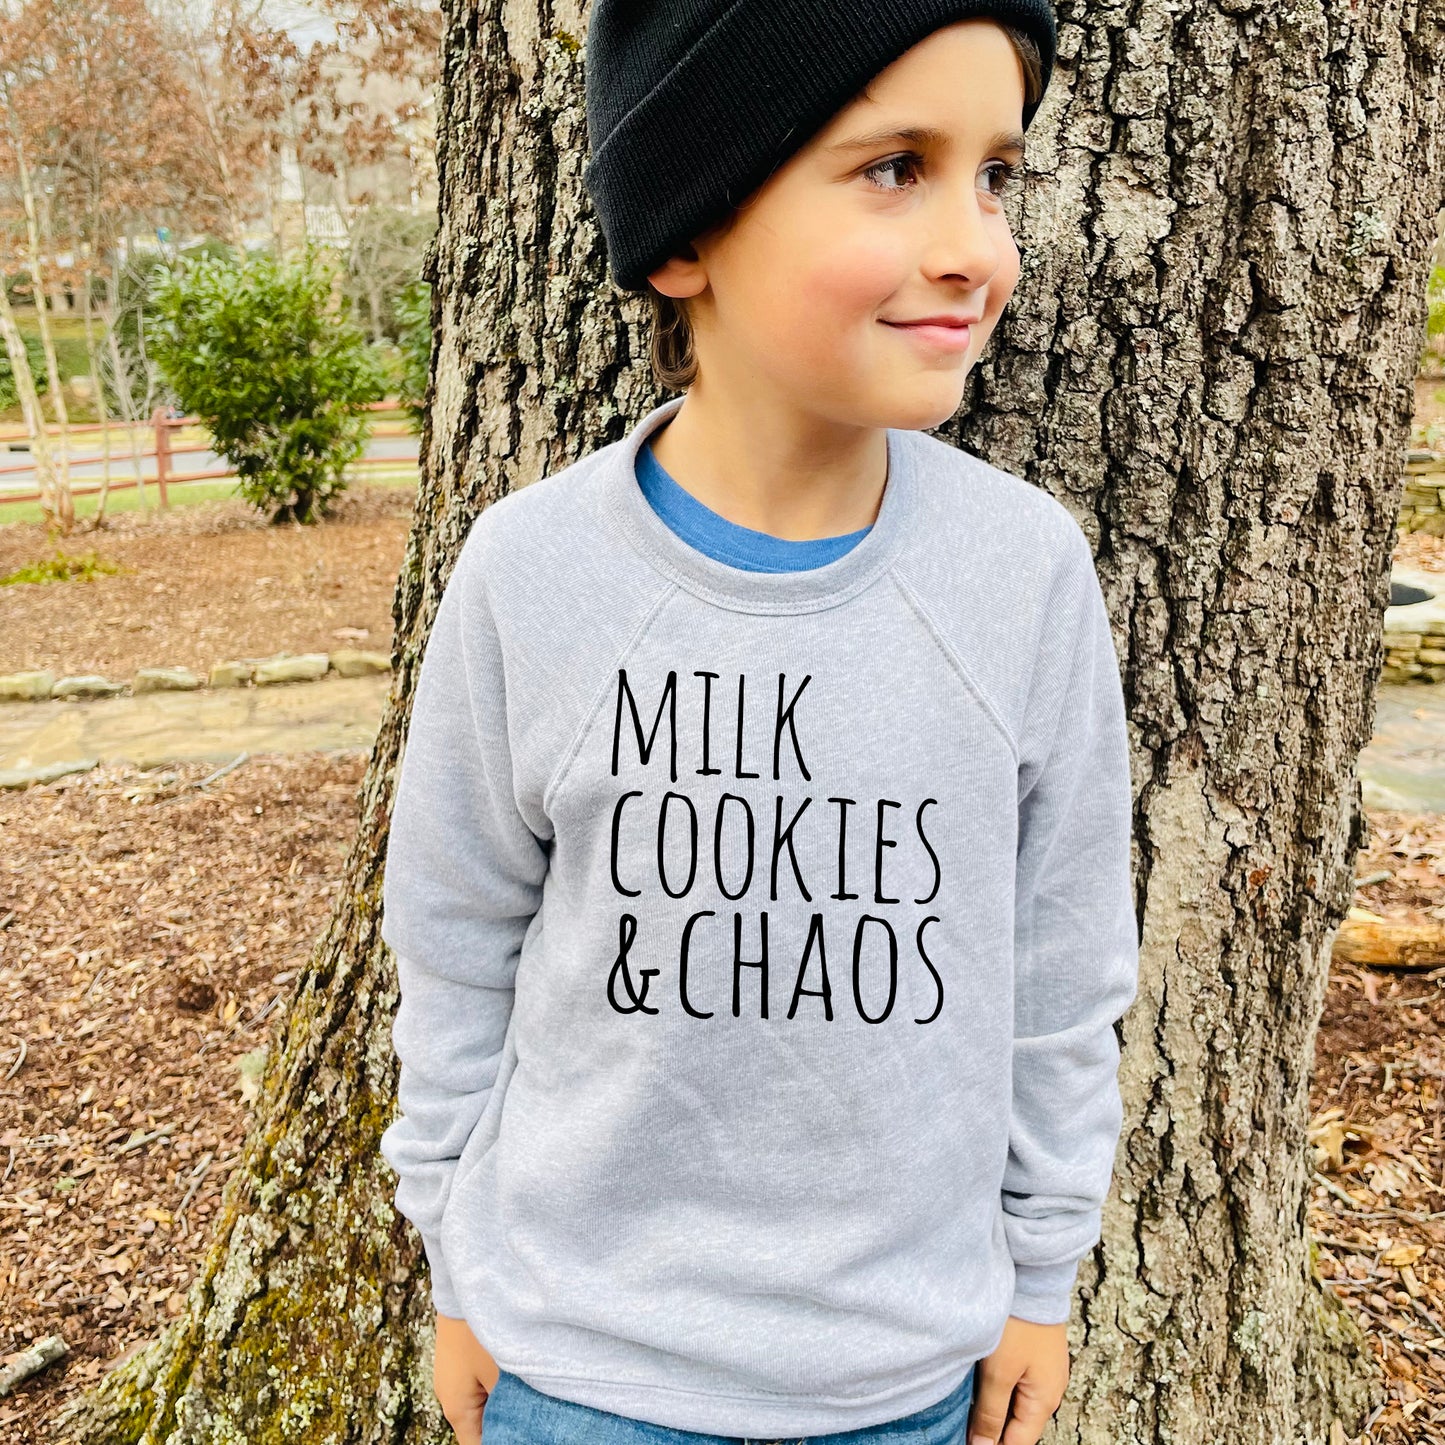 Milk Cookies & Chaos - Kid's Sweatshirt - Heather Gray or Mauve